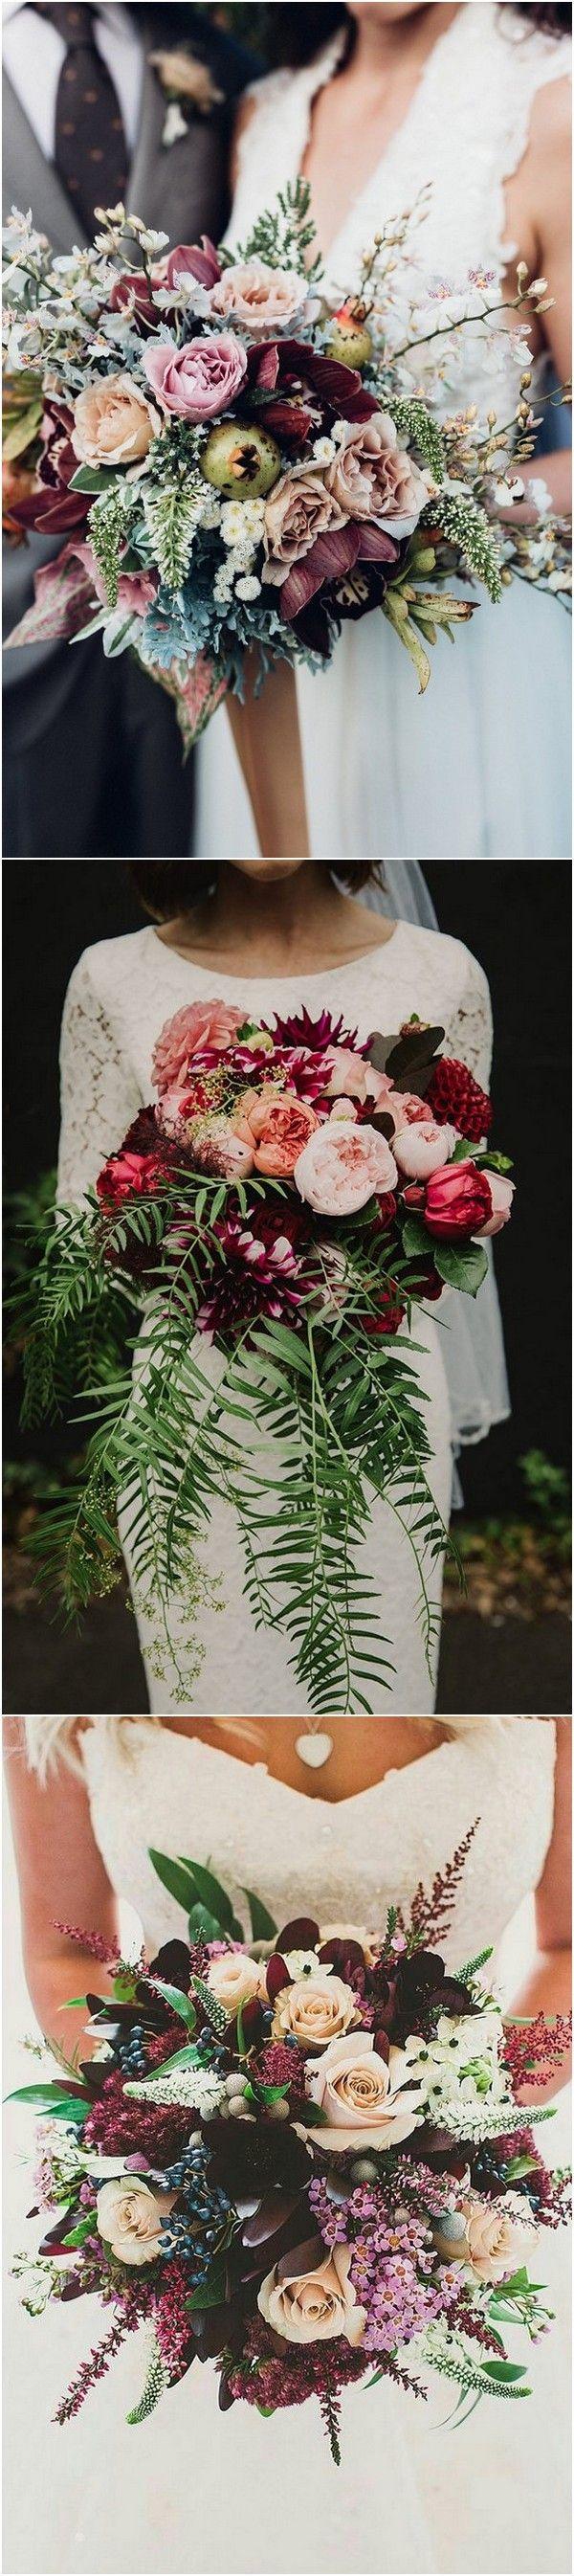 Hochzeit - Trending-15 Gorgeous Burgundy And Blush Wedding Bouquet Ideas - Page 2 Of 3